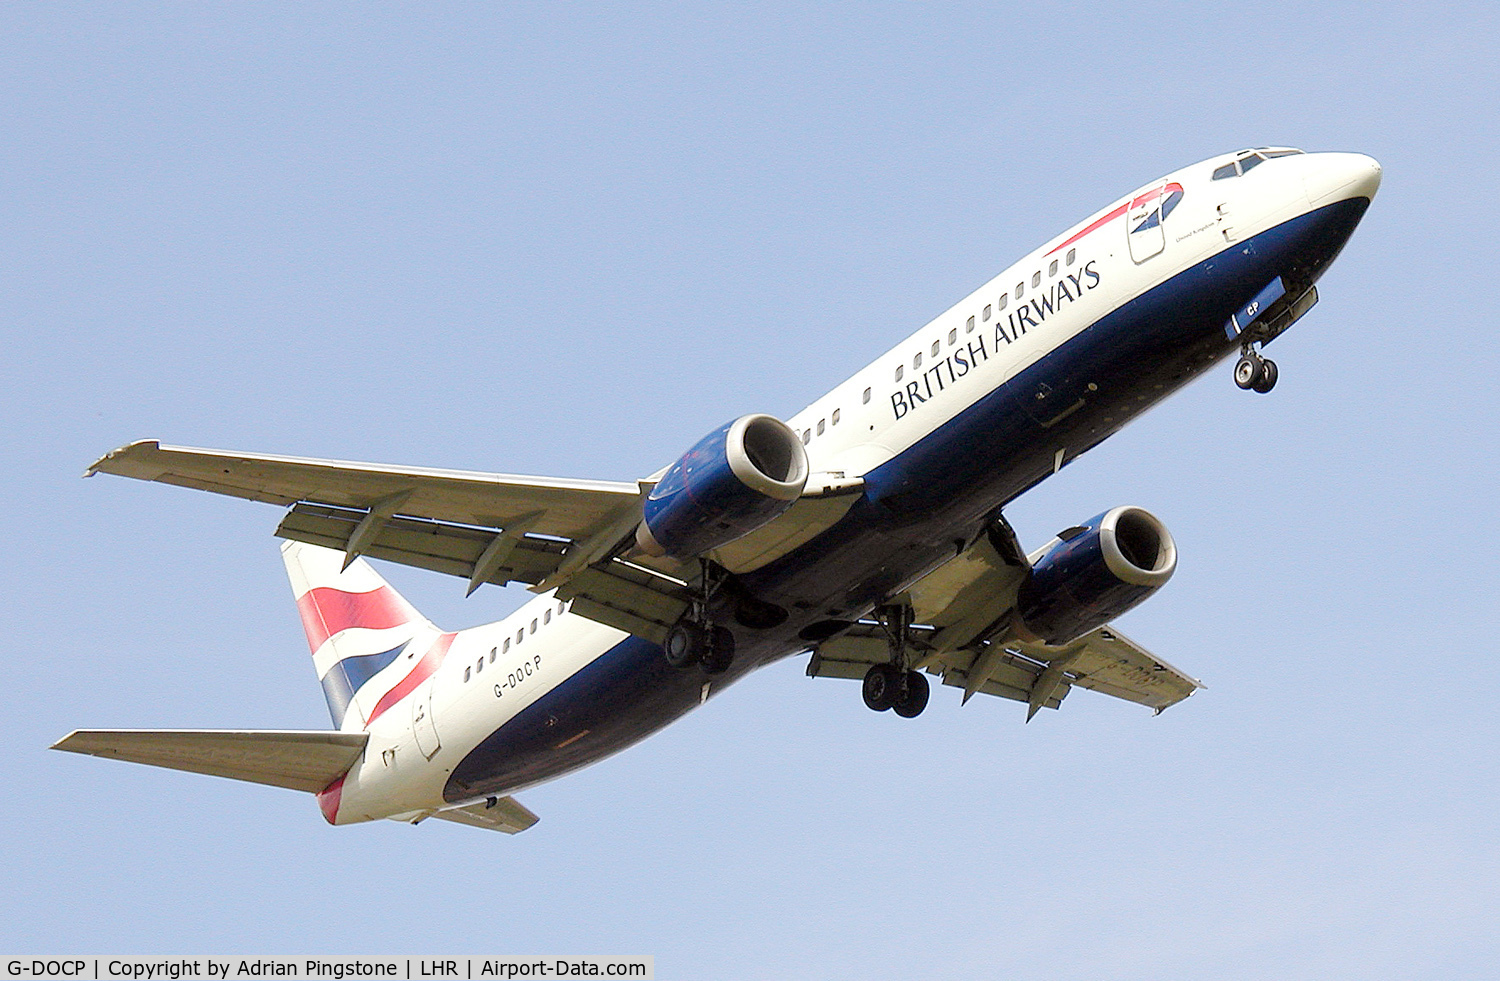 G-DOCP, 1992 Boeing 737-436 C/N 25850, British Airways Boeing 737-400 landing at London (Heathrow) Airport, England